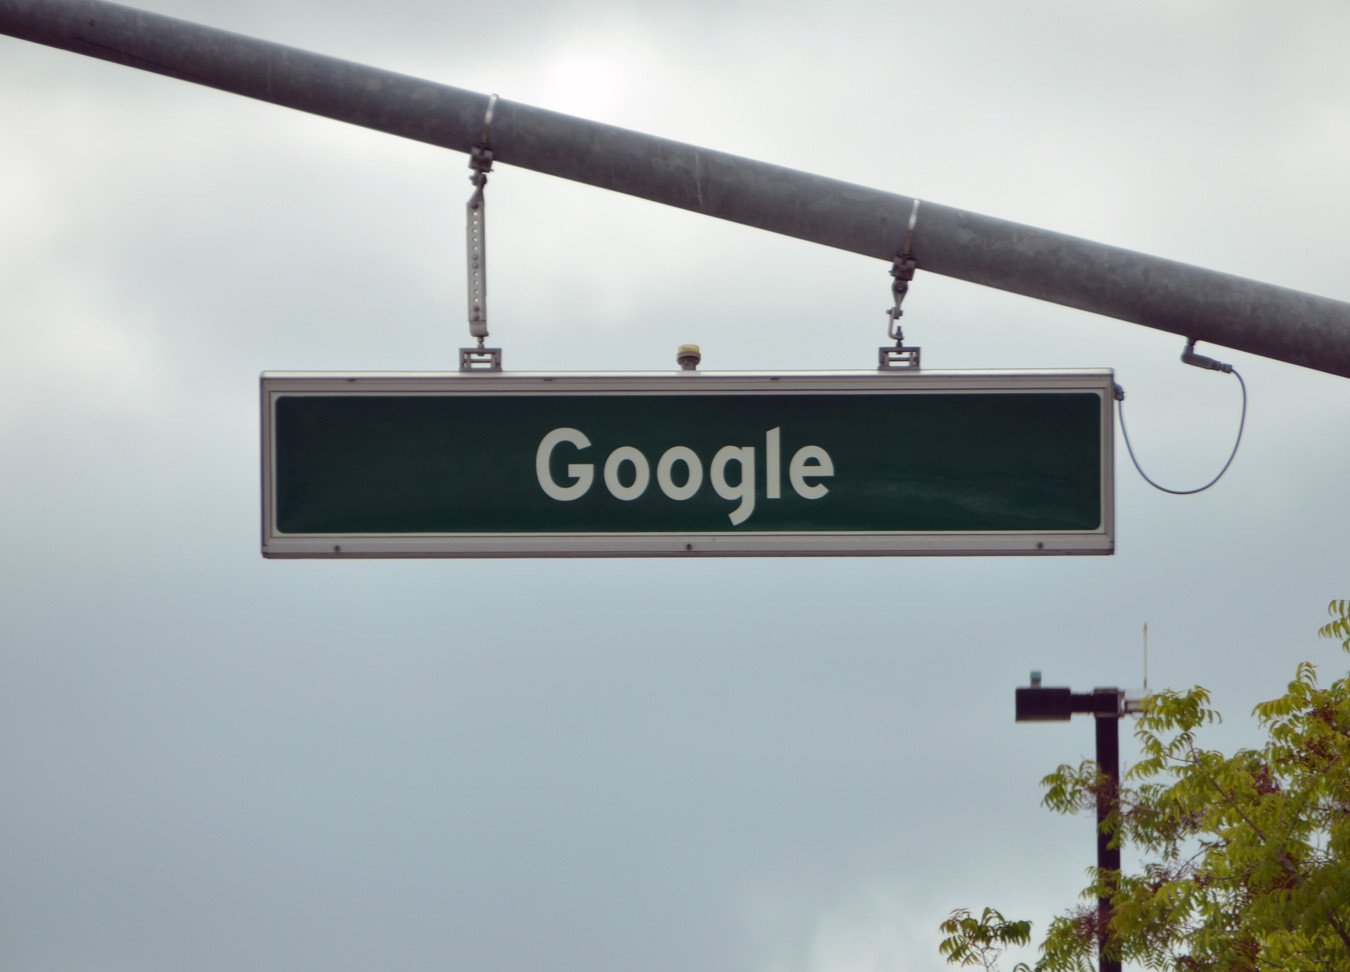 Google Street sign in Mountain View, California